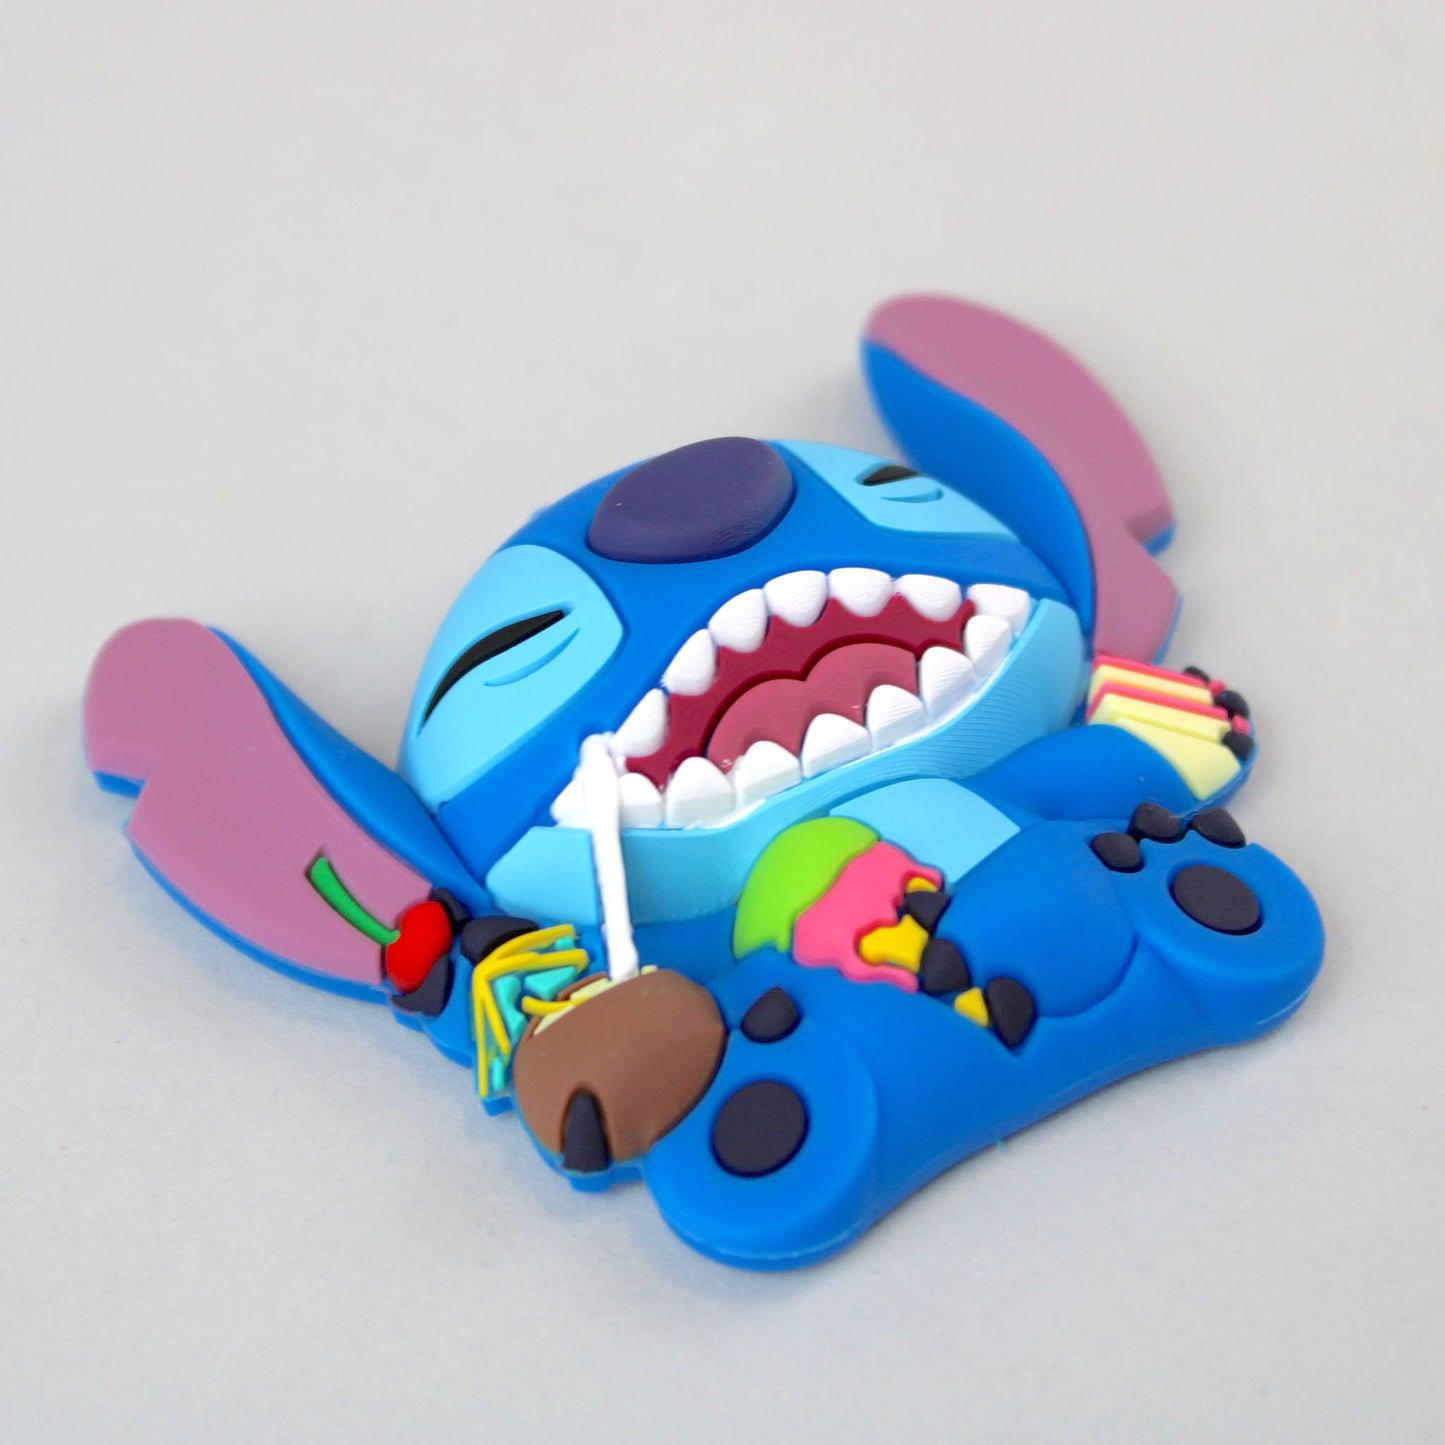 Disney: Lilo & Stitch - Stitch with Food - 3D Foam Magnet - 4GEEKS